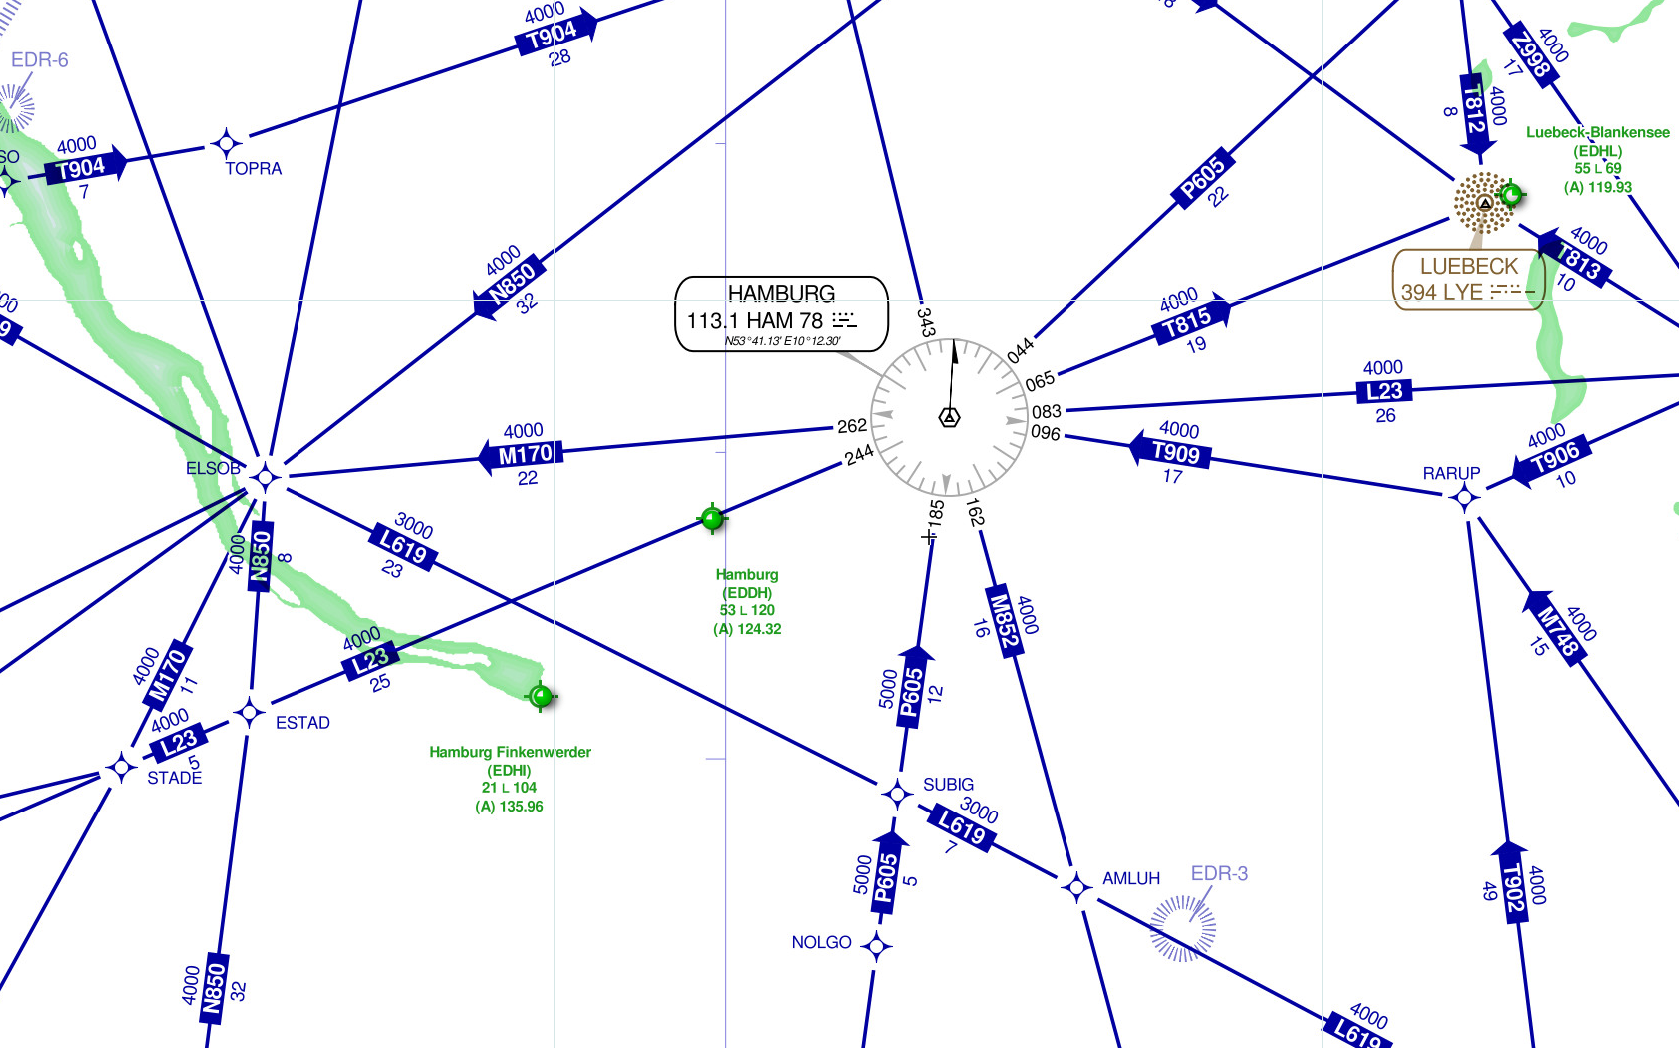 An aeronautic navigational chart.